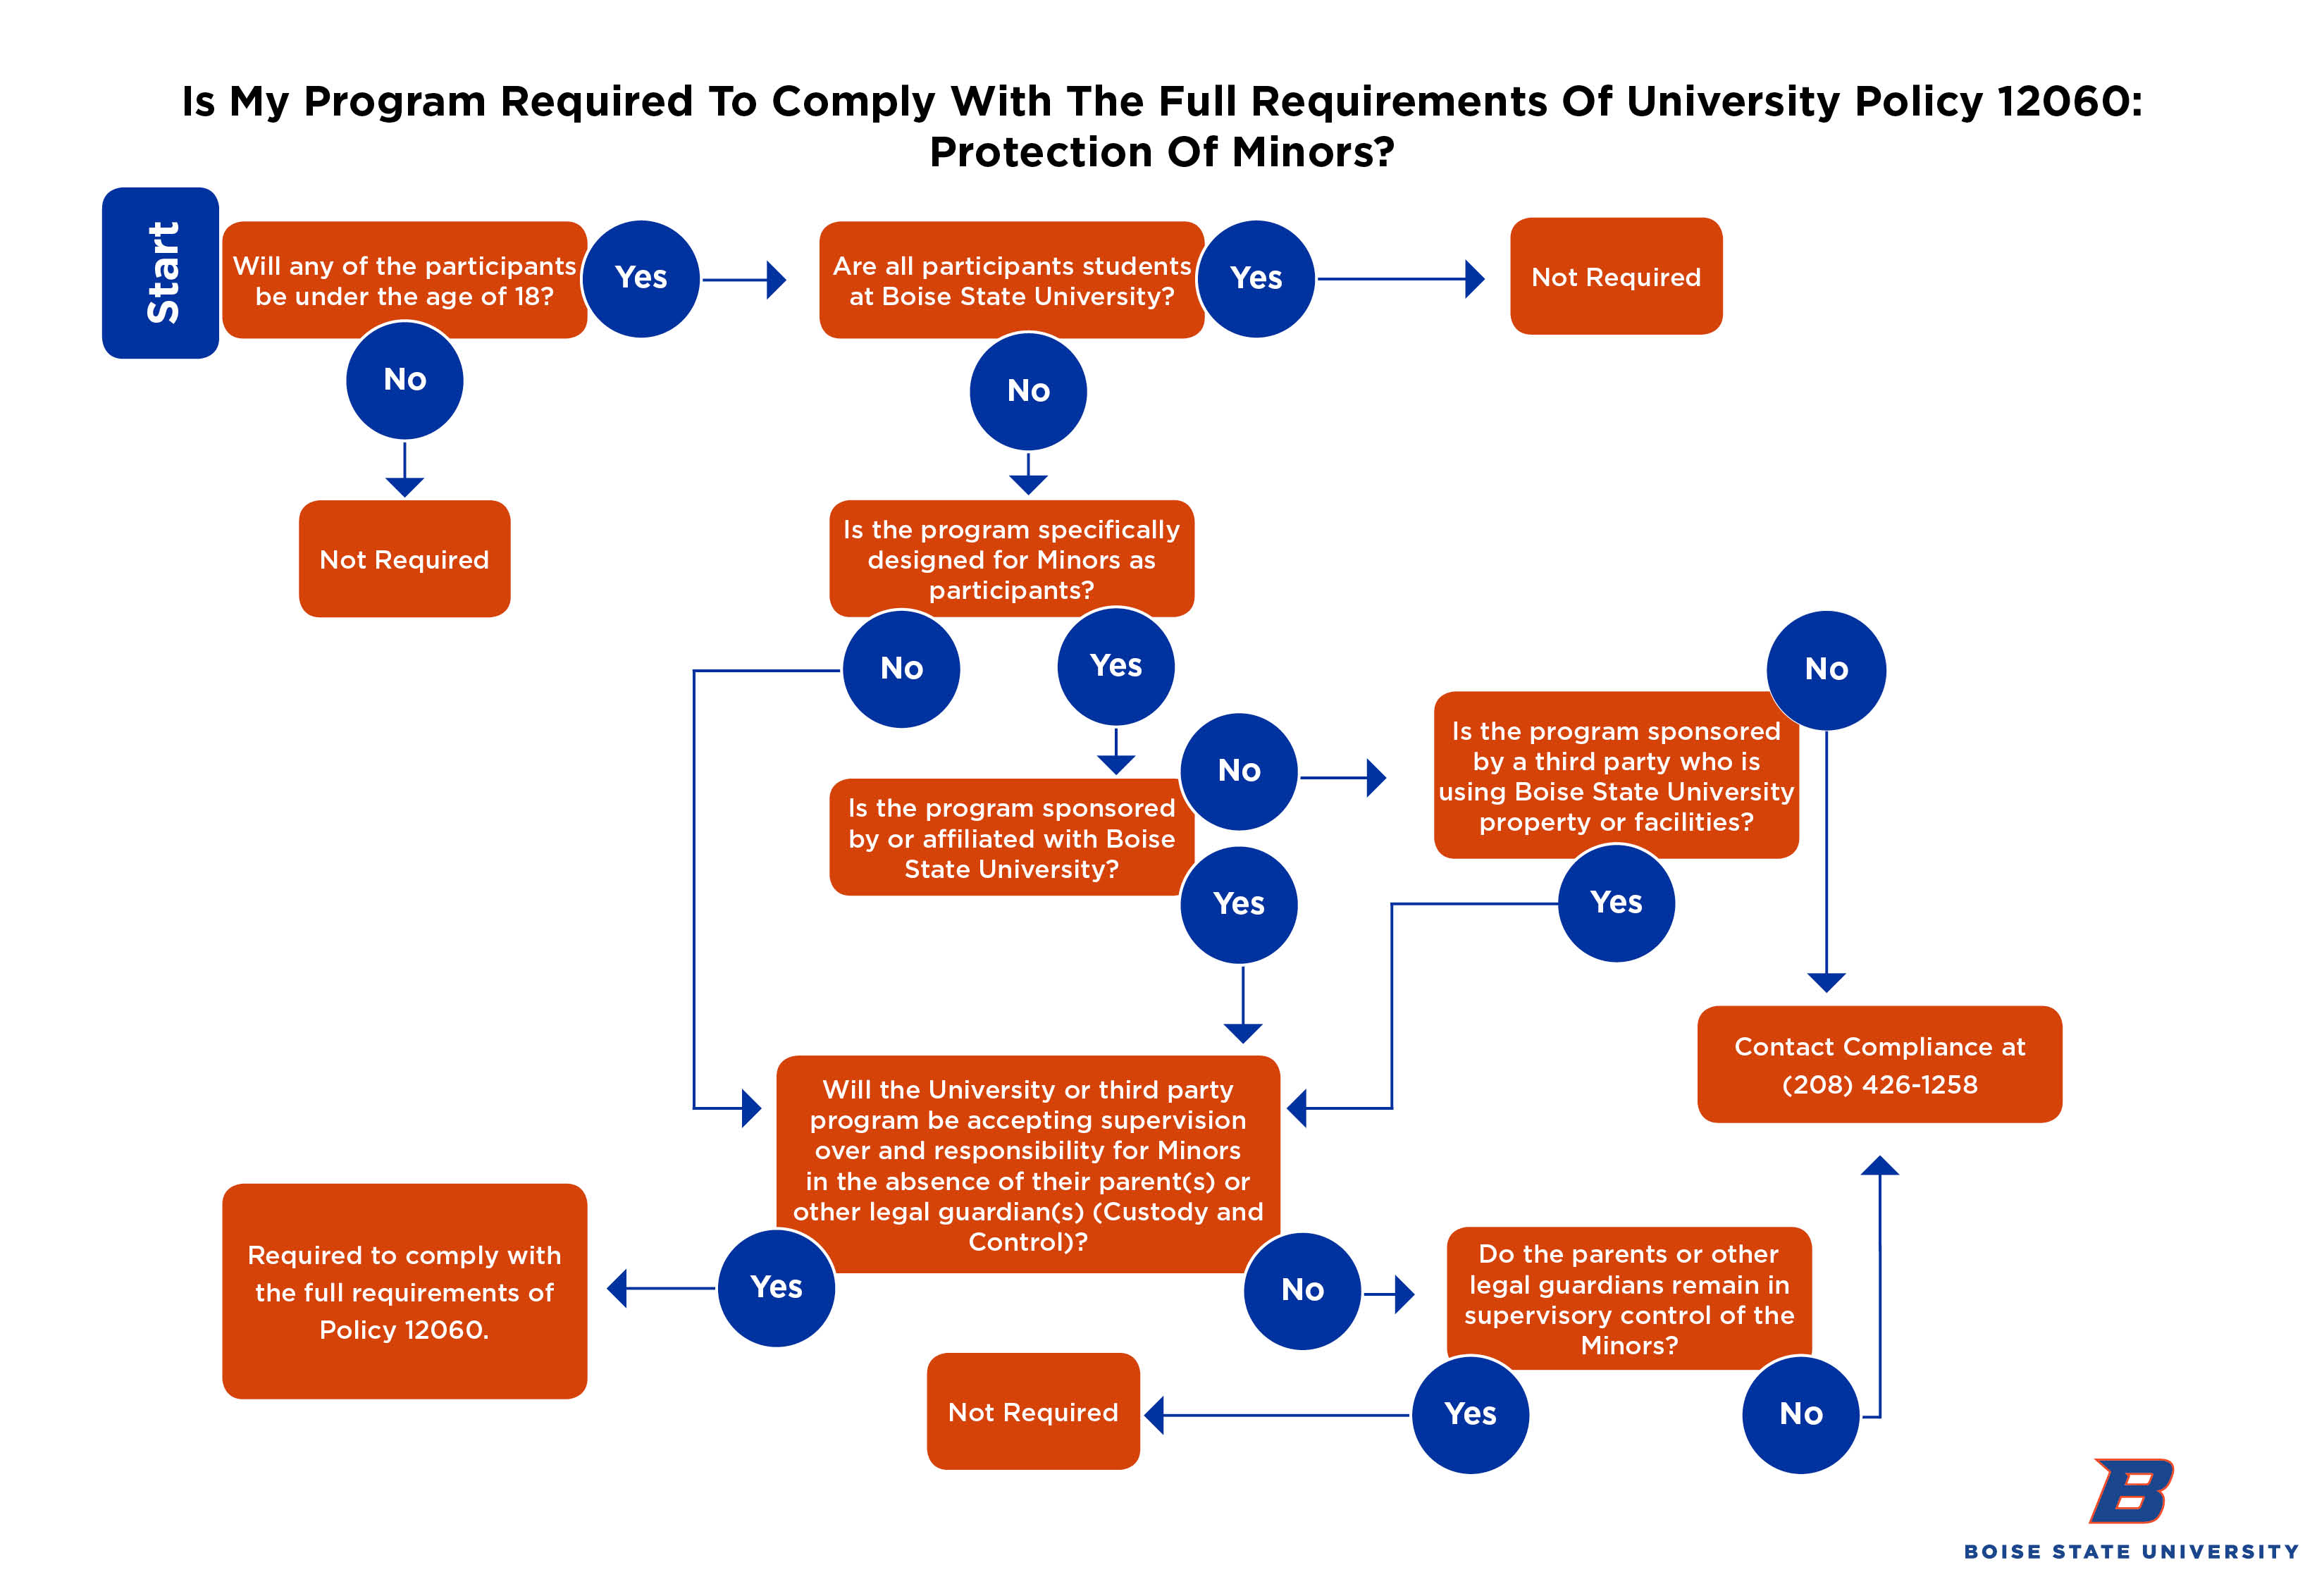 University Policy 12060 Flowchart - Text description available below